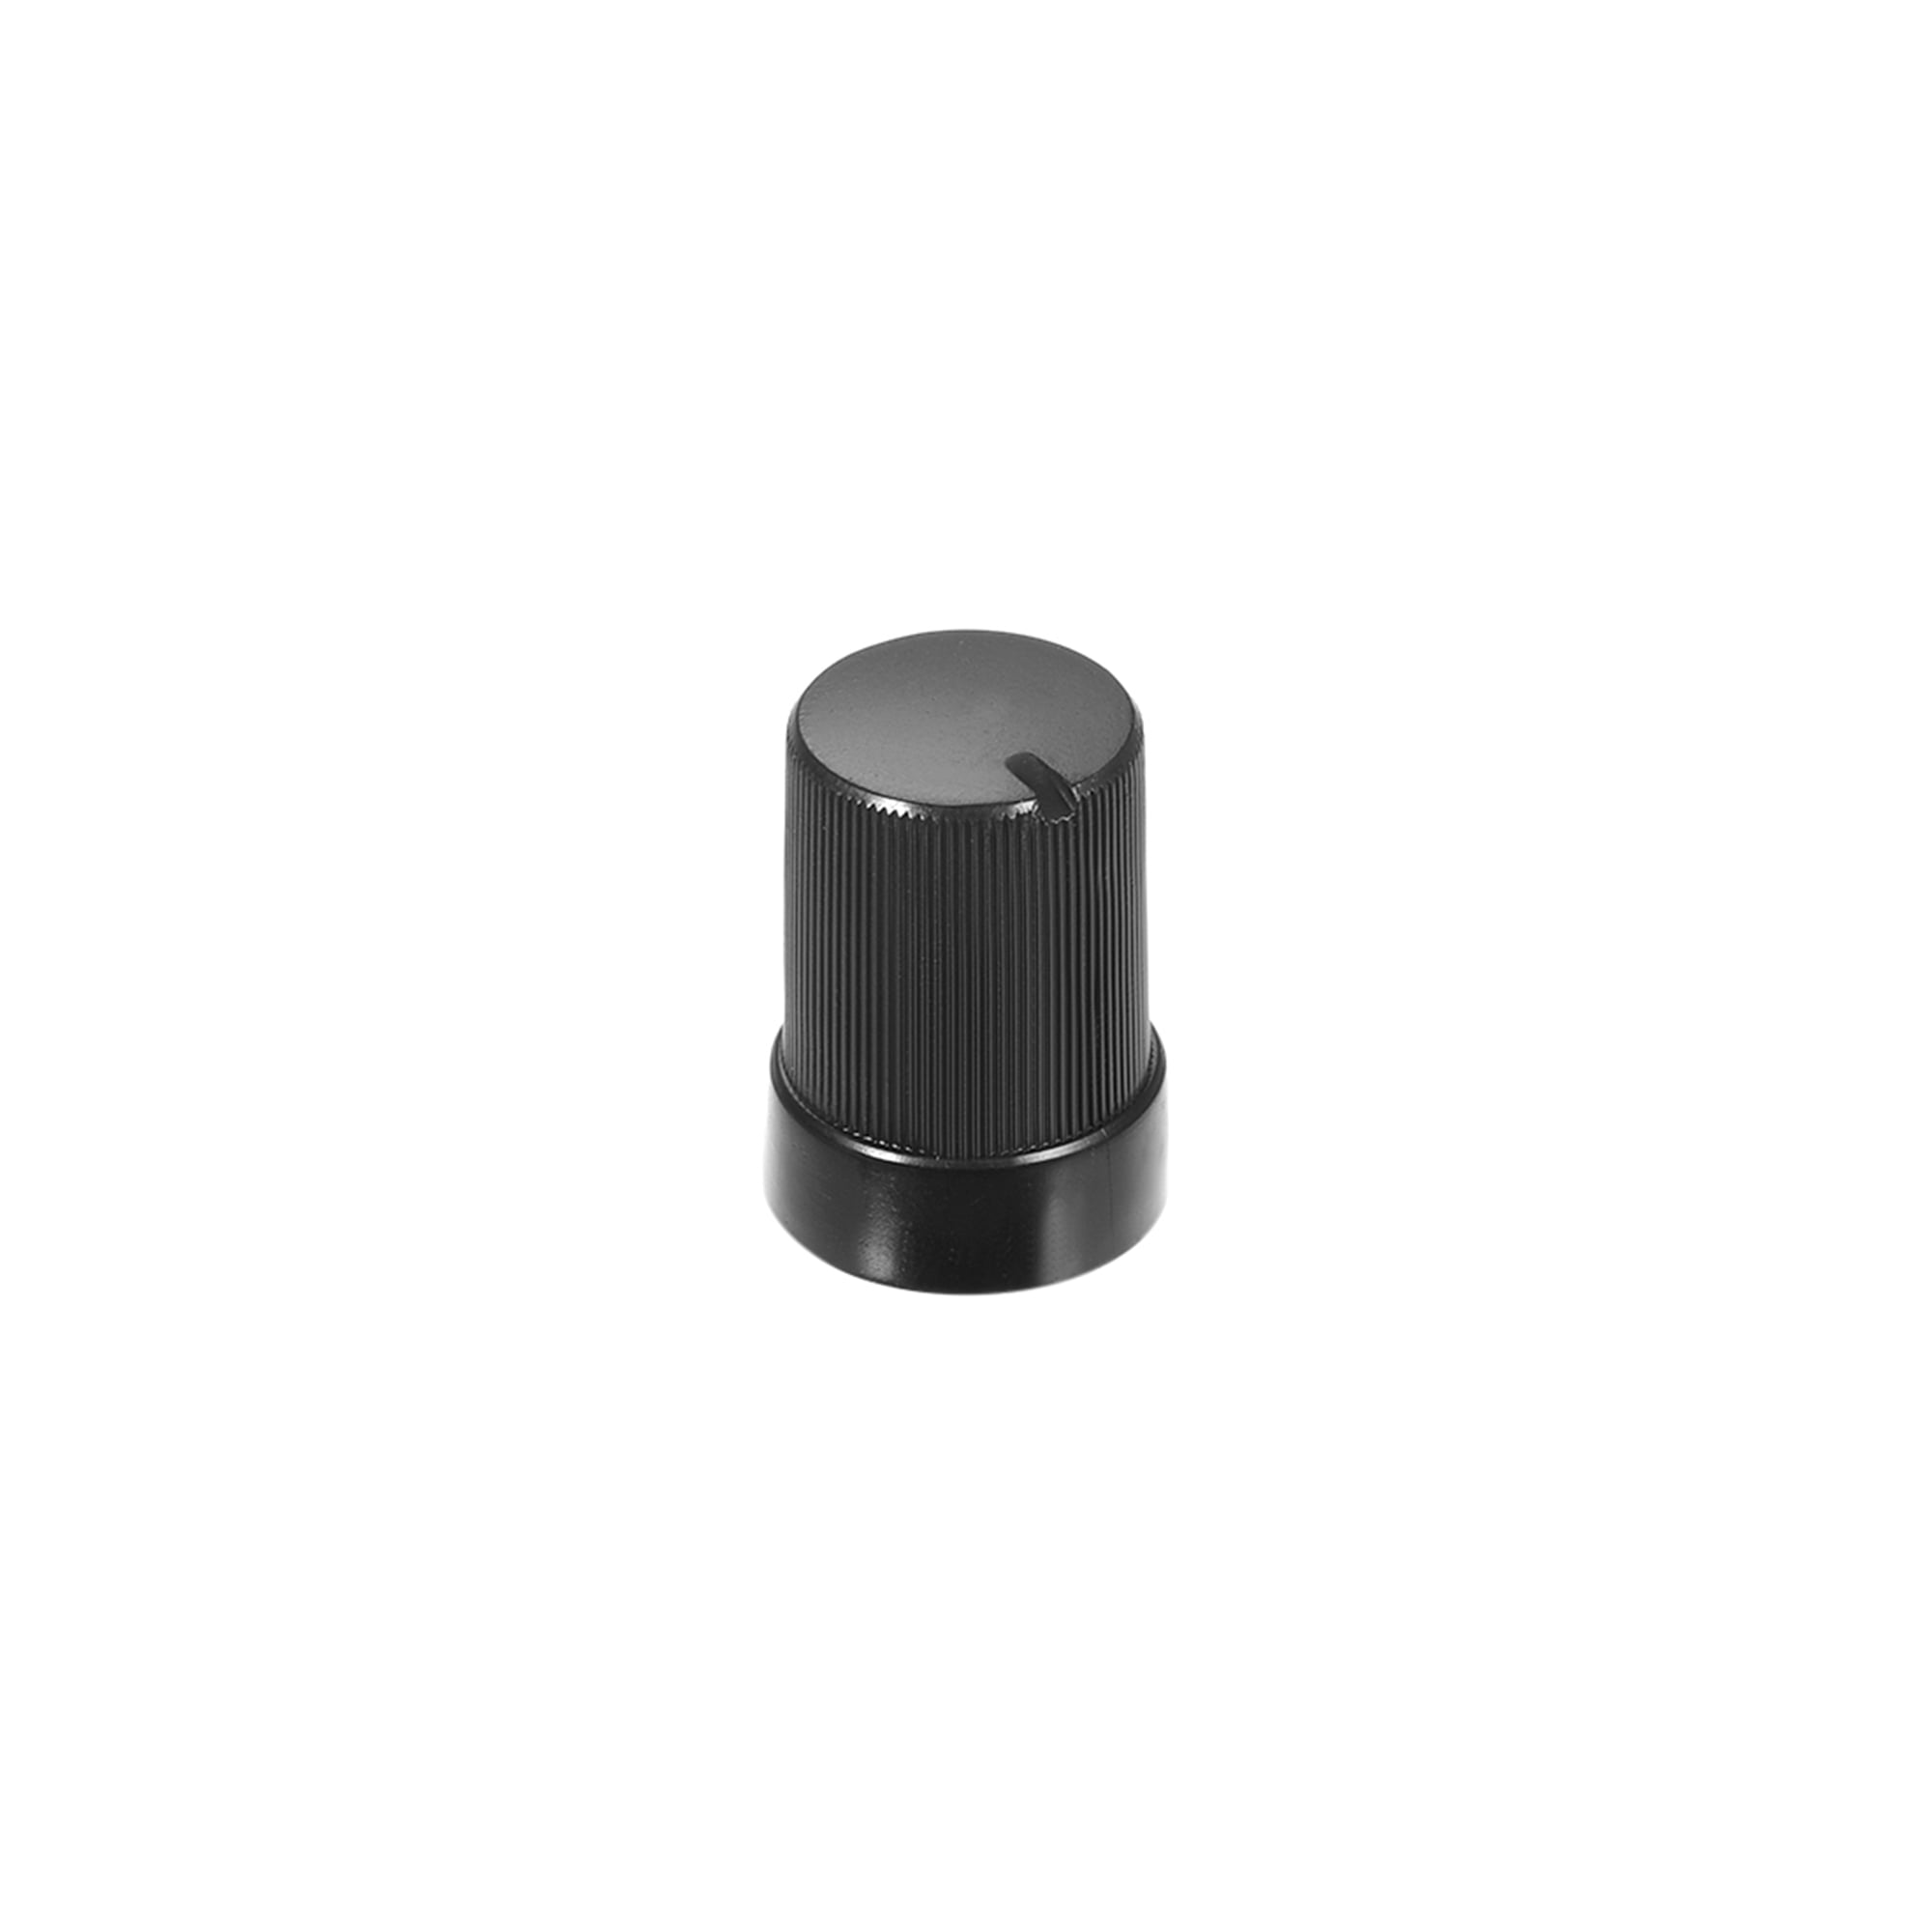 Red 5pcs 6mm Insertion shaft 14.7x17mm Rotating knob of plastic potentiometer Black 